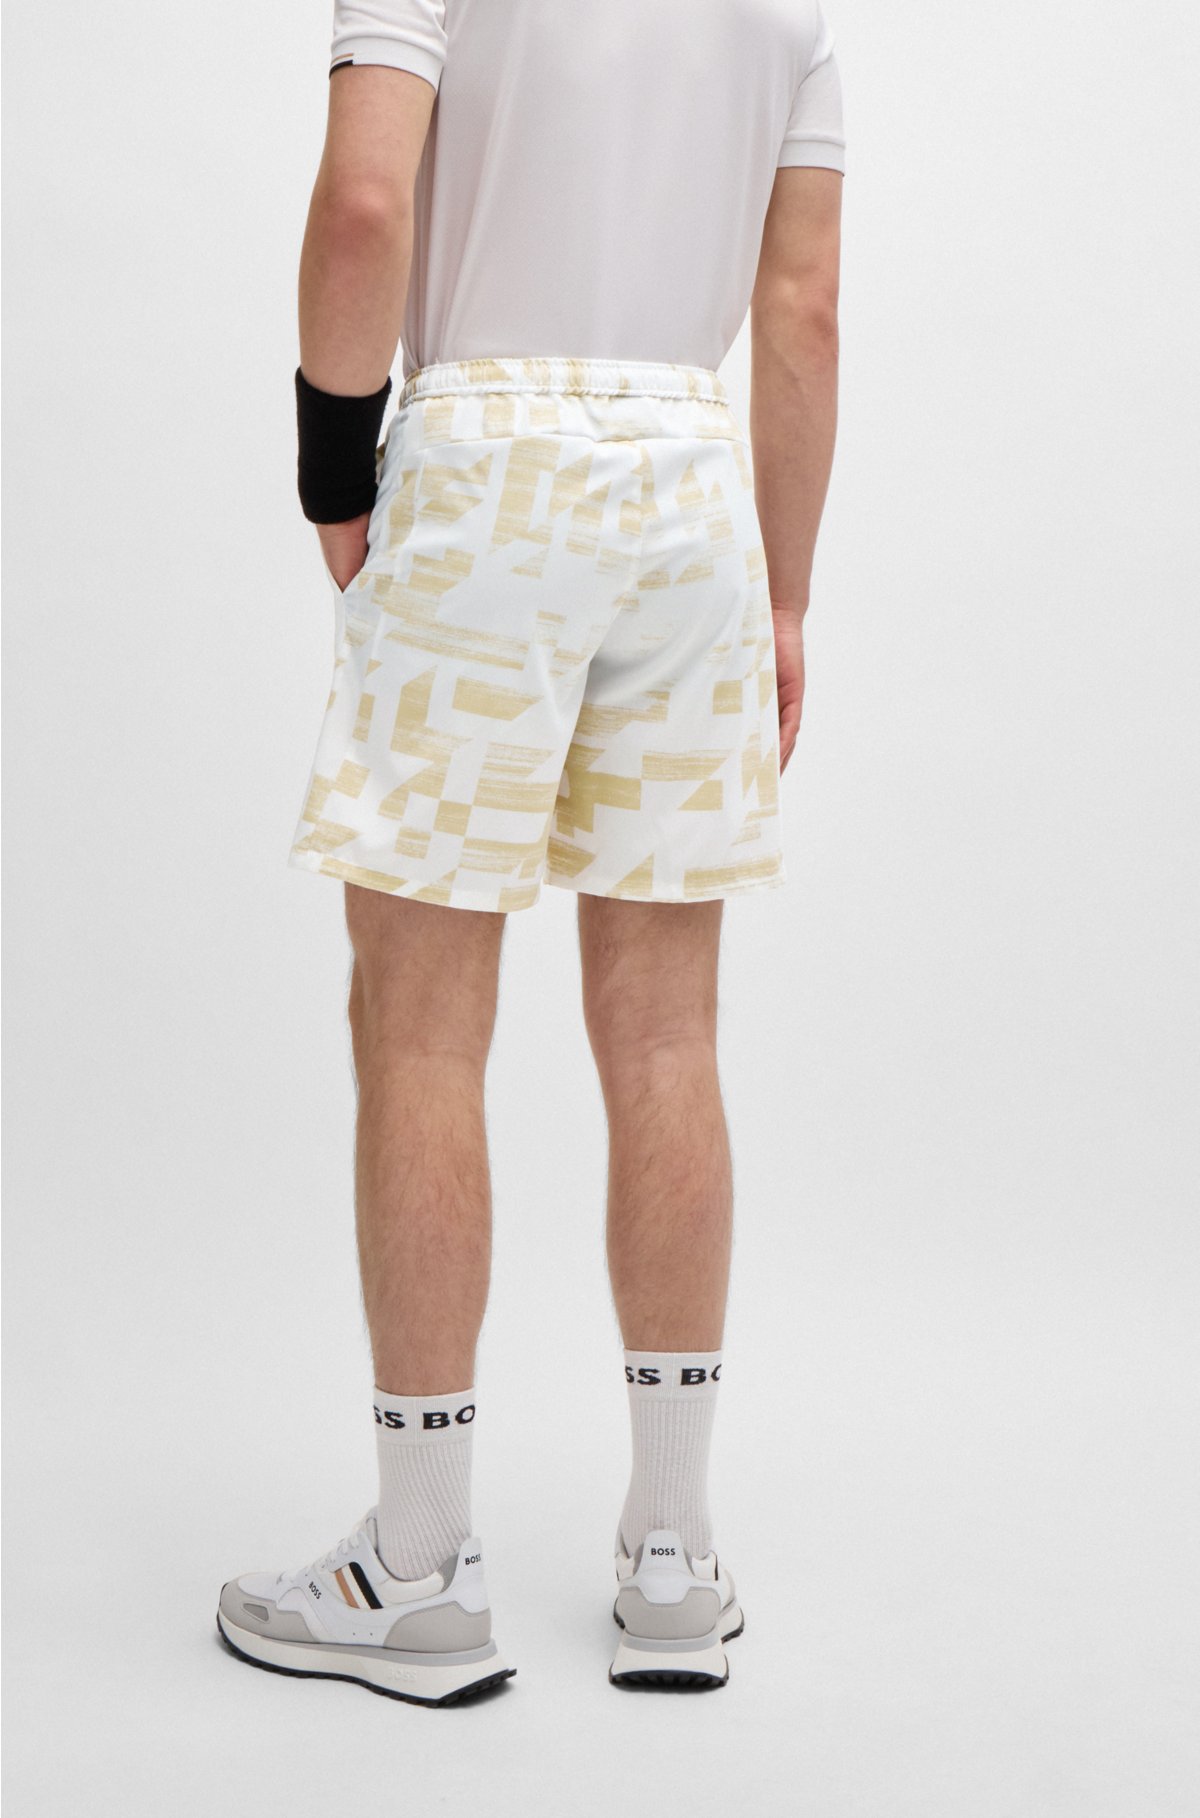 BOSS x Matteo Berrettini water-repellent shorts with logo print, Natural